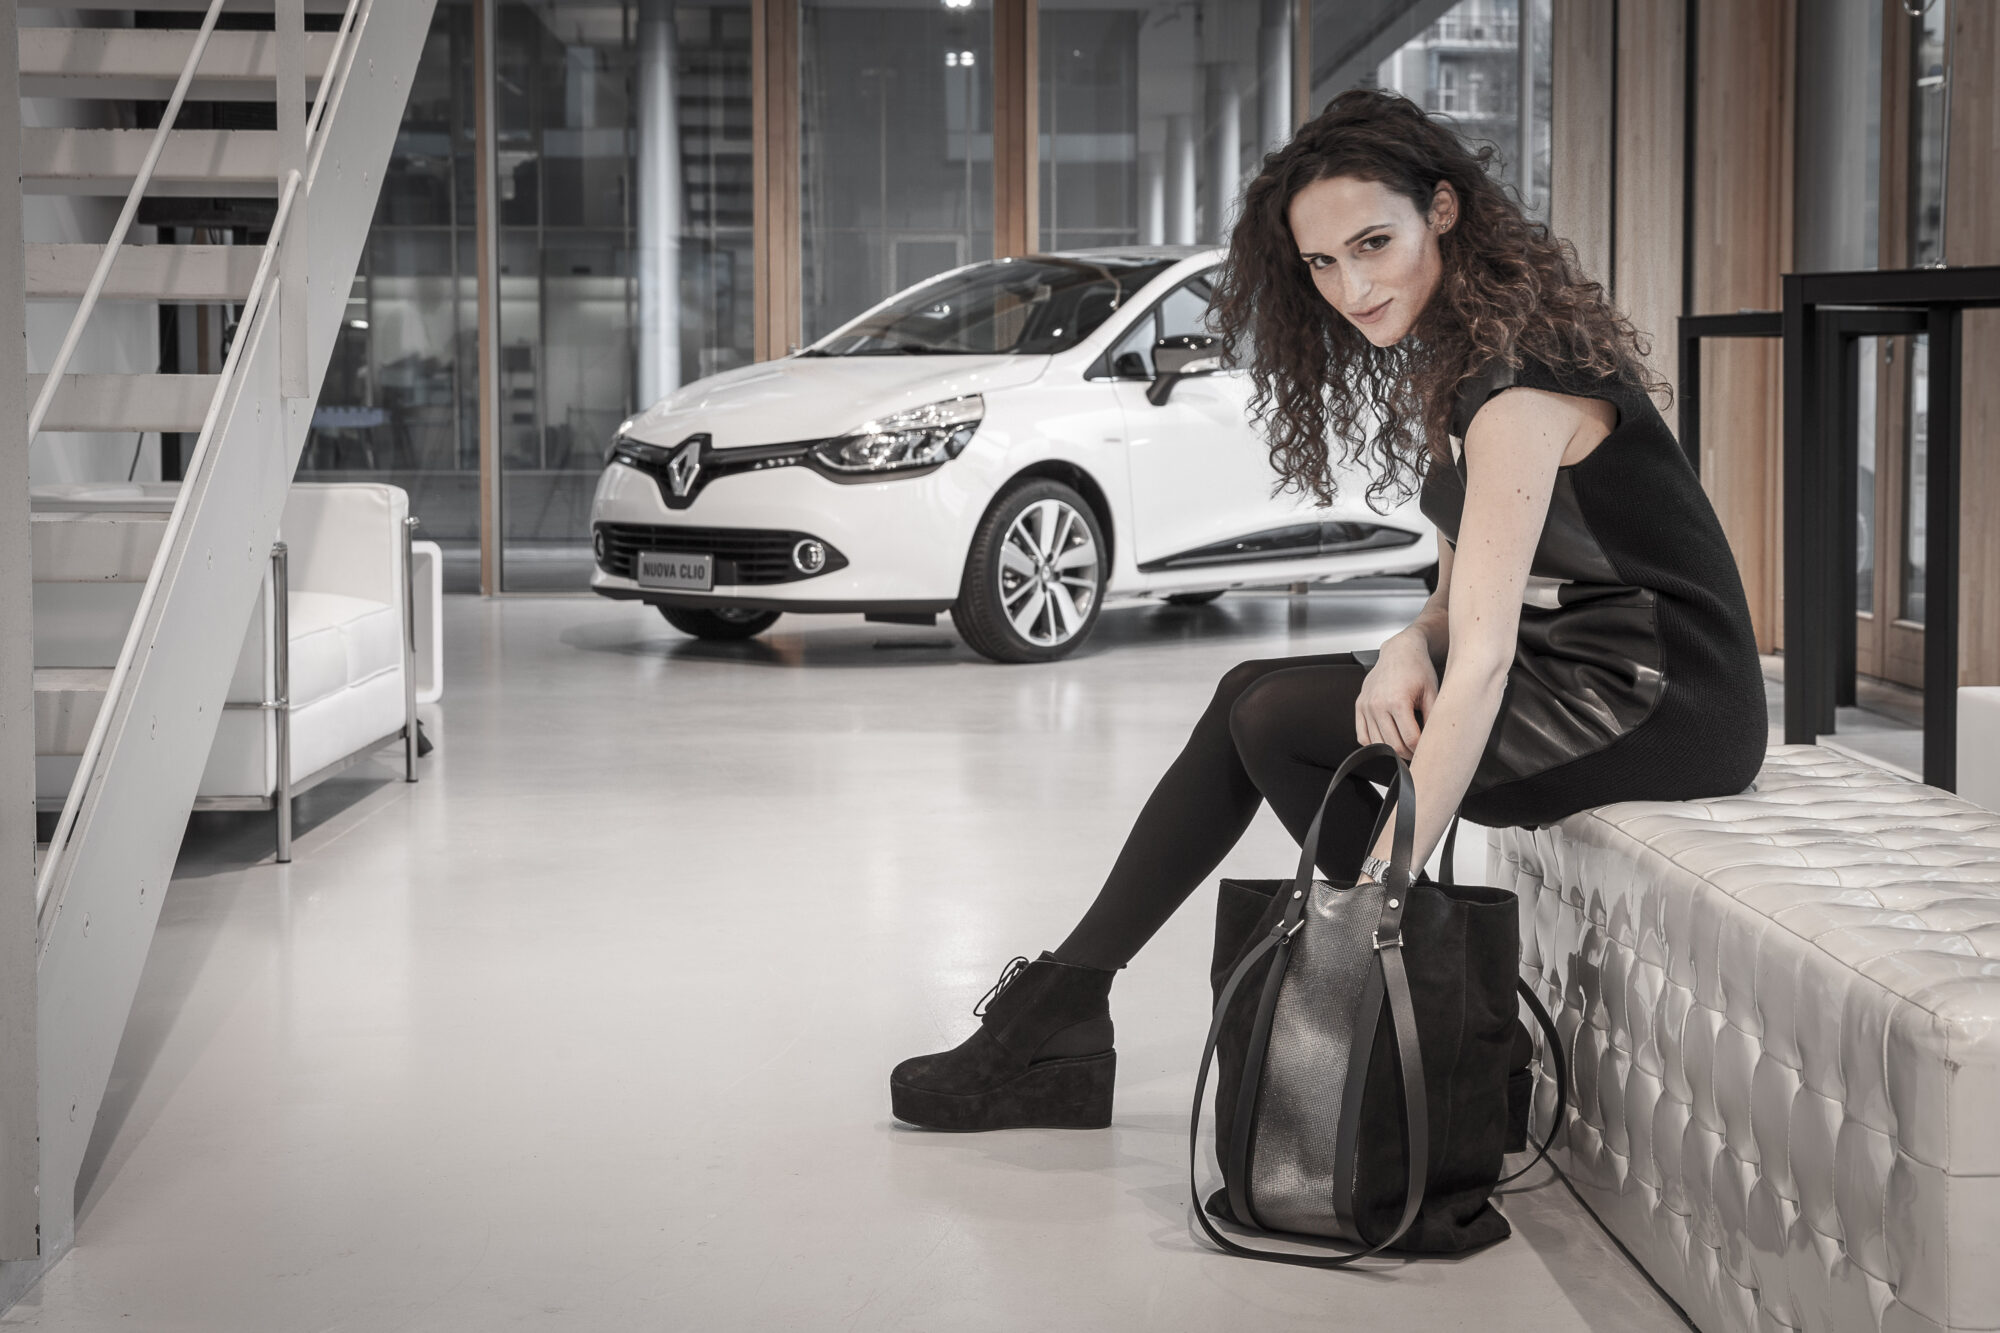 Renault Clio Costume National Celebrate Edition